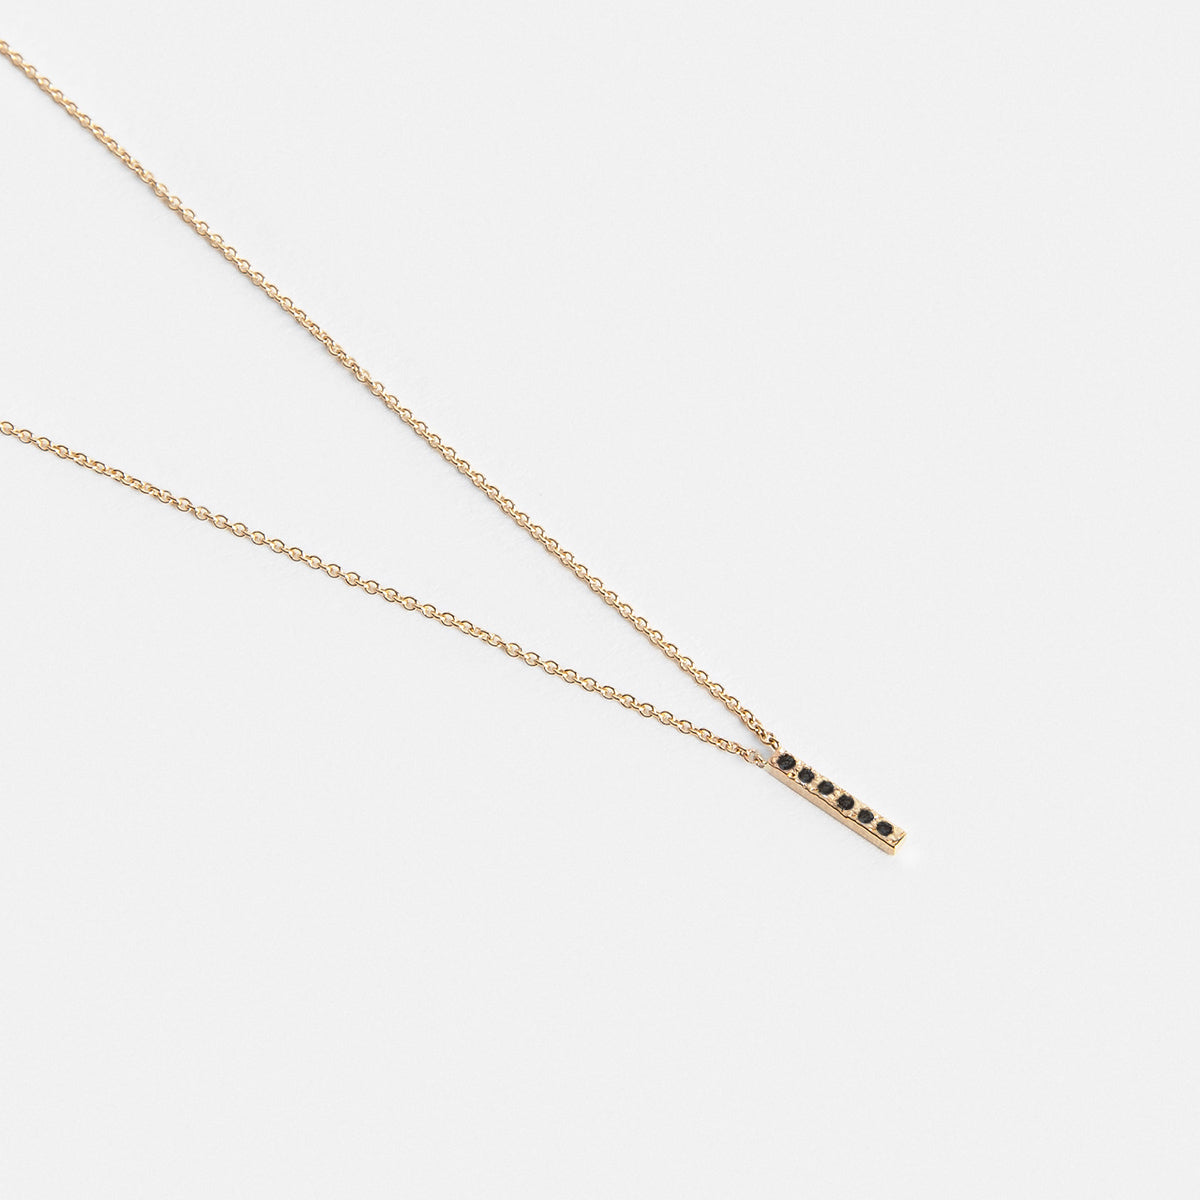 Mini Tiru Delicate Necklace in 14k Gold set with Black Diamonds By SHW Fine Jewelry NYC